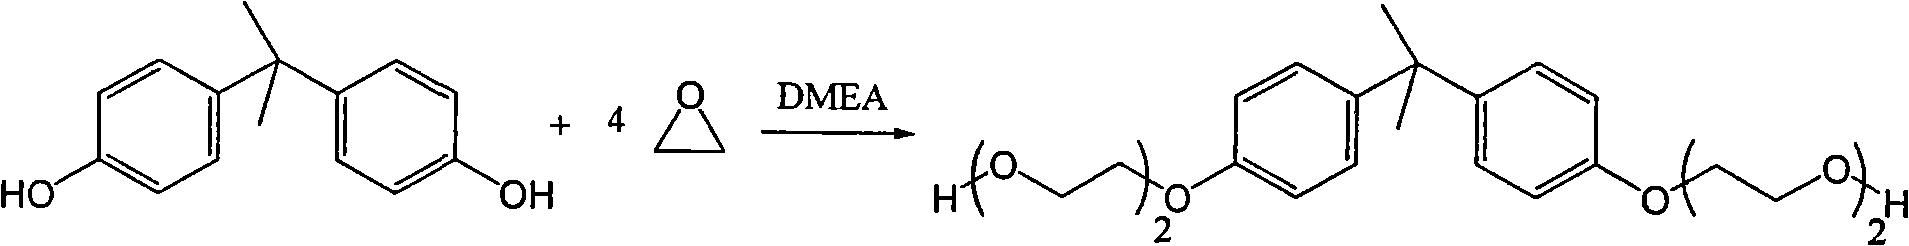 Method for synthesizing bisphenol A ethoxy compound